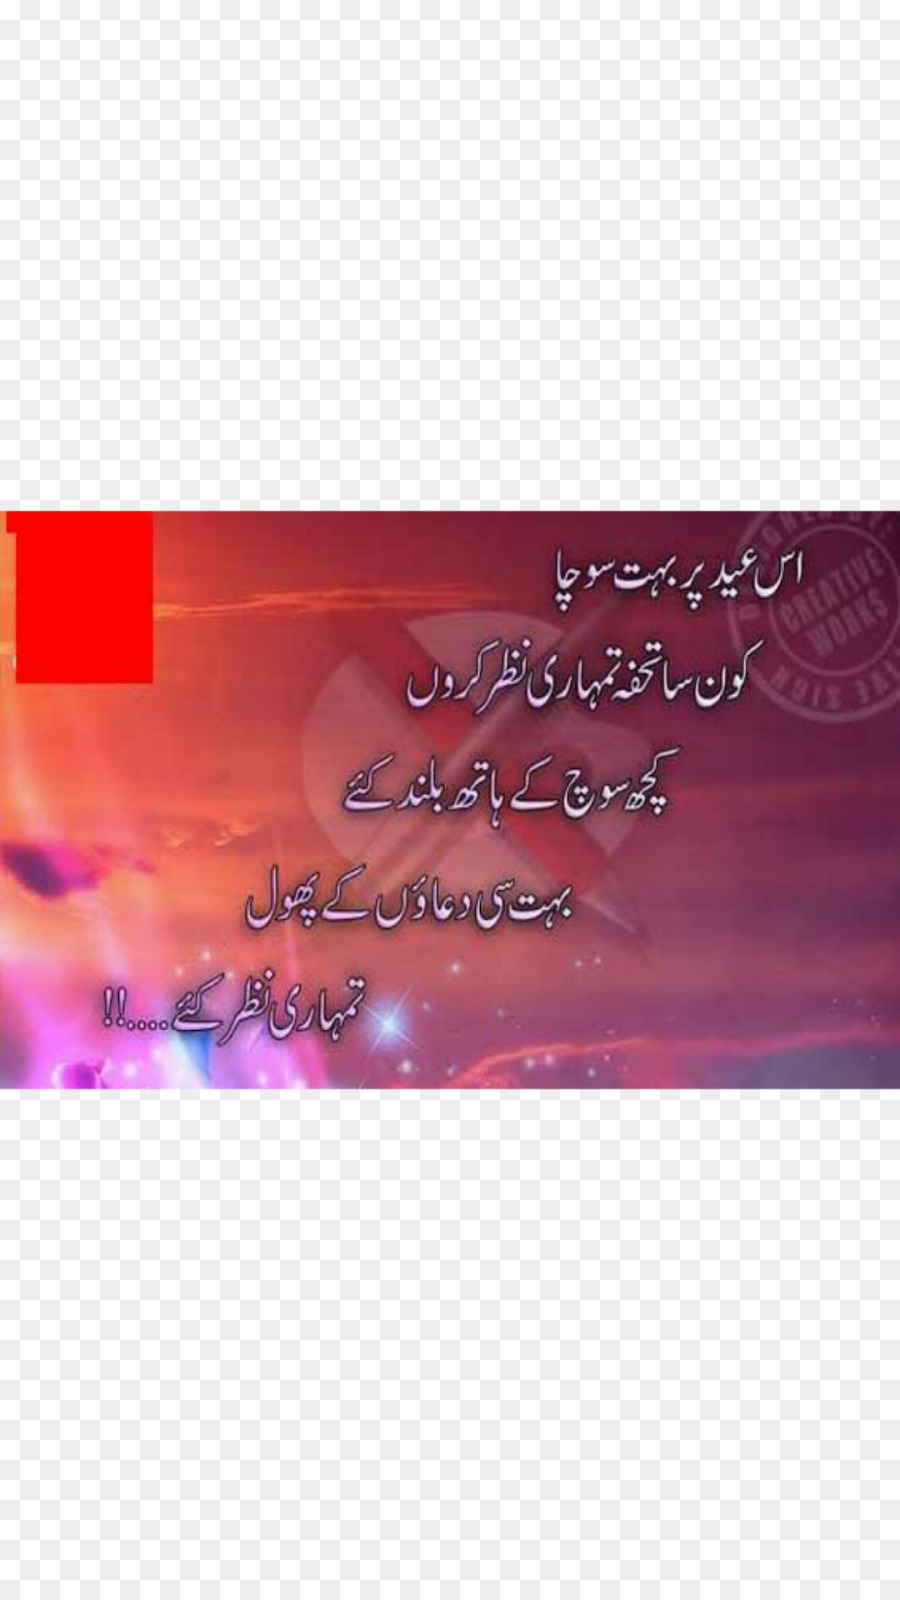 Urdu Linea di poesia Nazar karo - linea